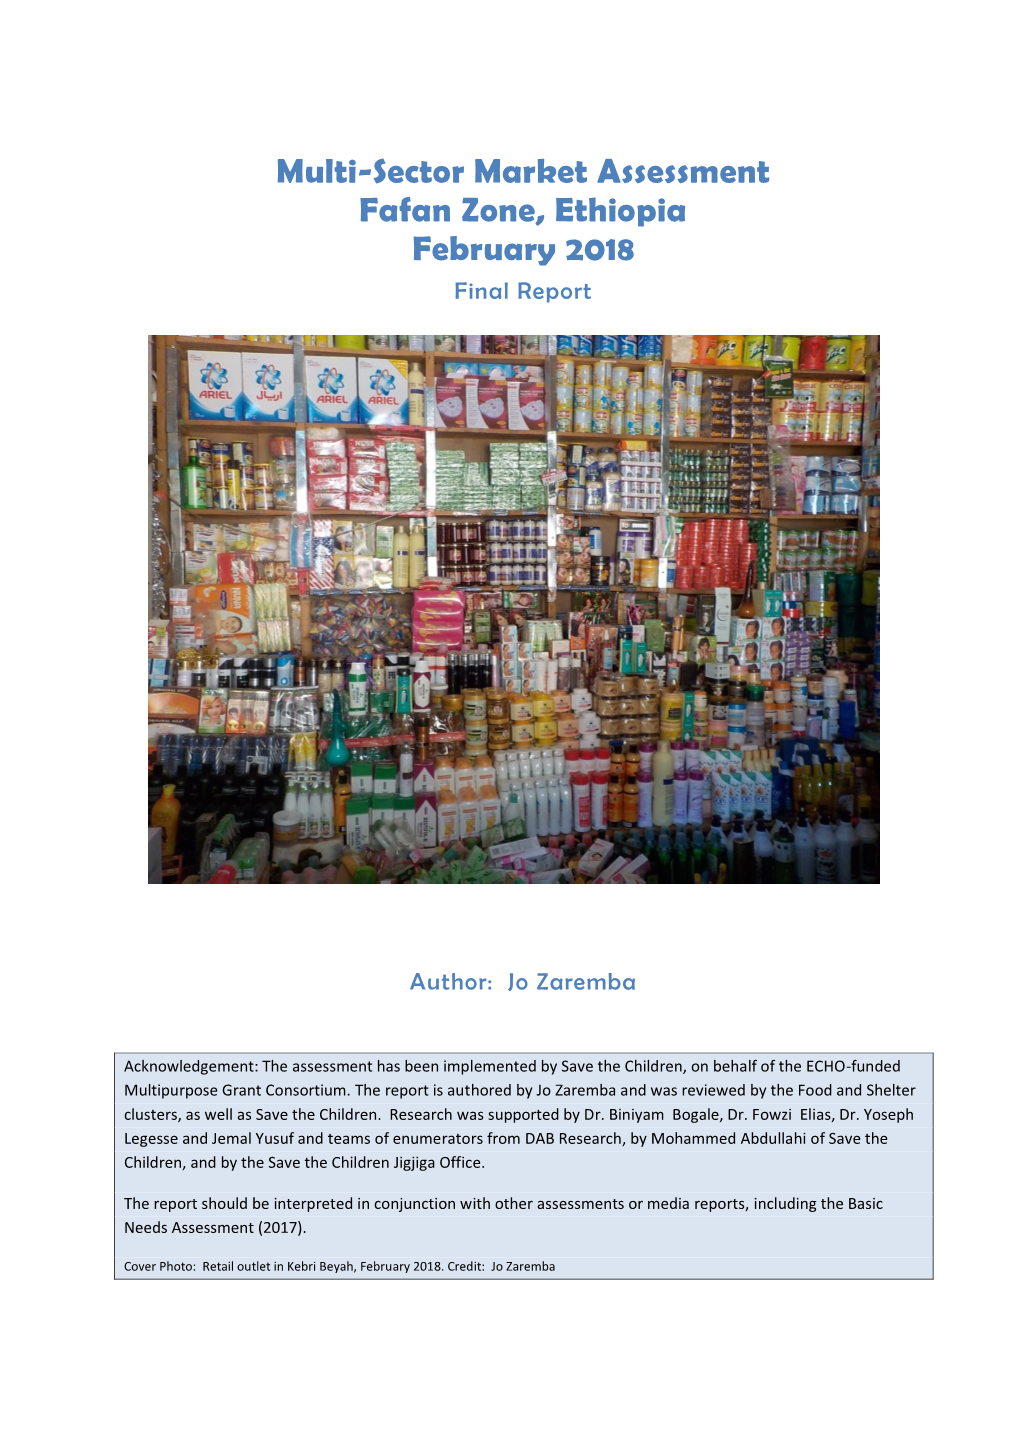 Multi-Sector Market Assessment Fafan Zone, Ethiopia February 2018 Final Report